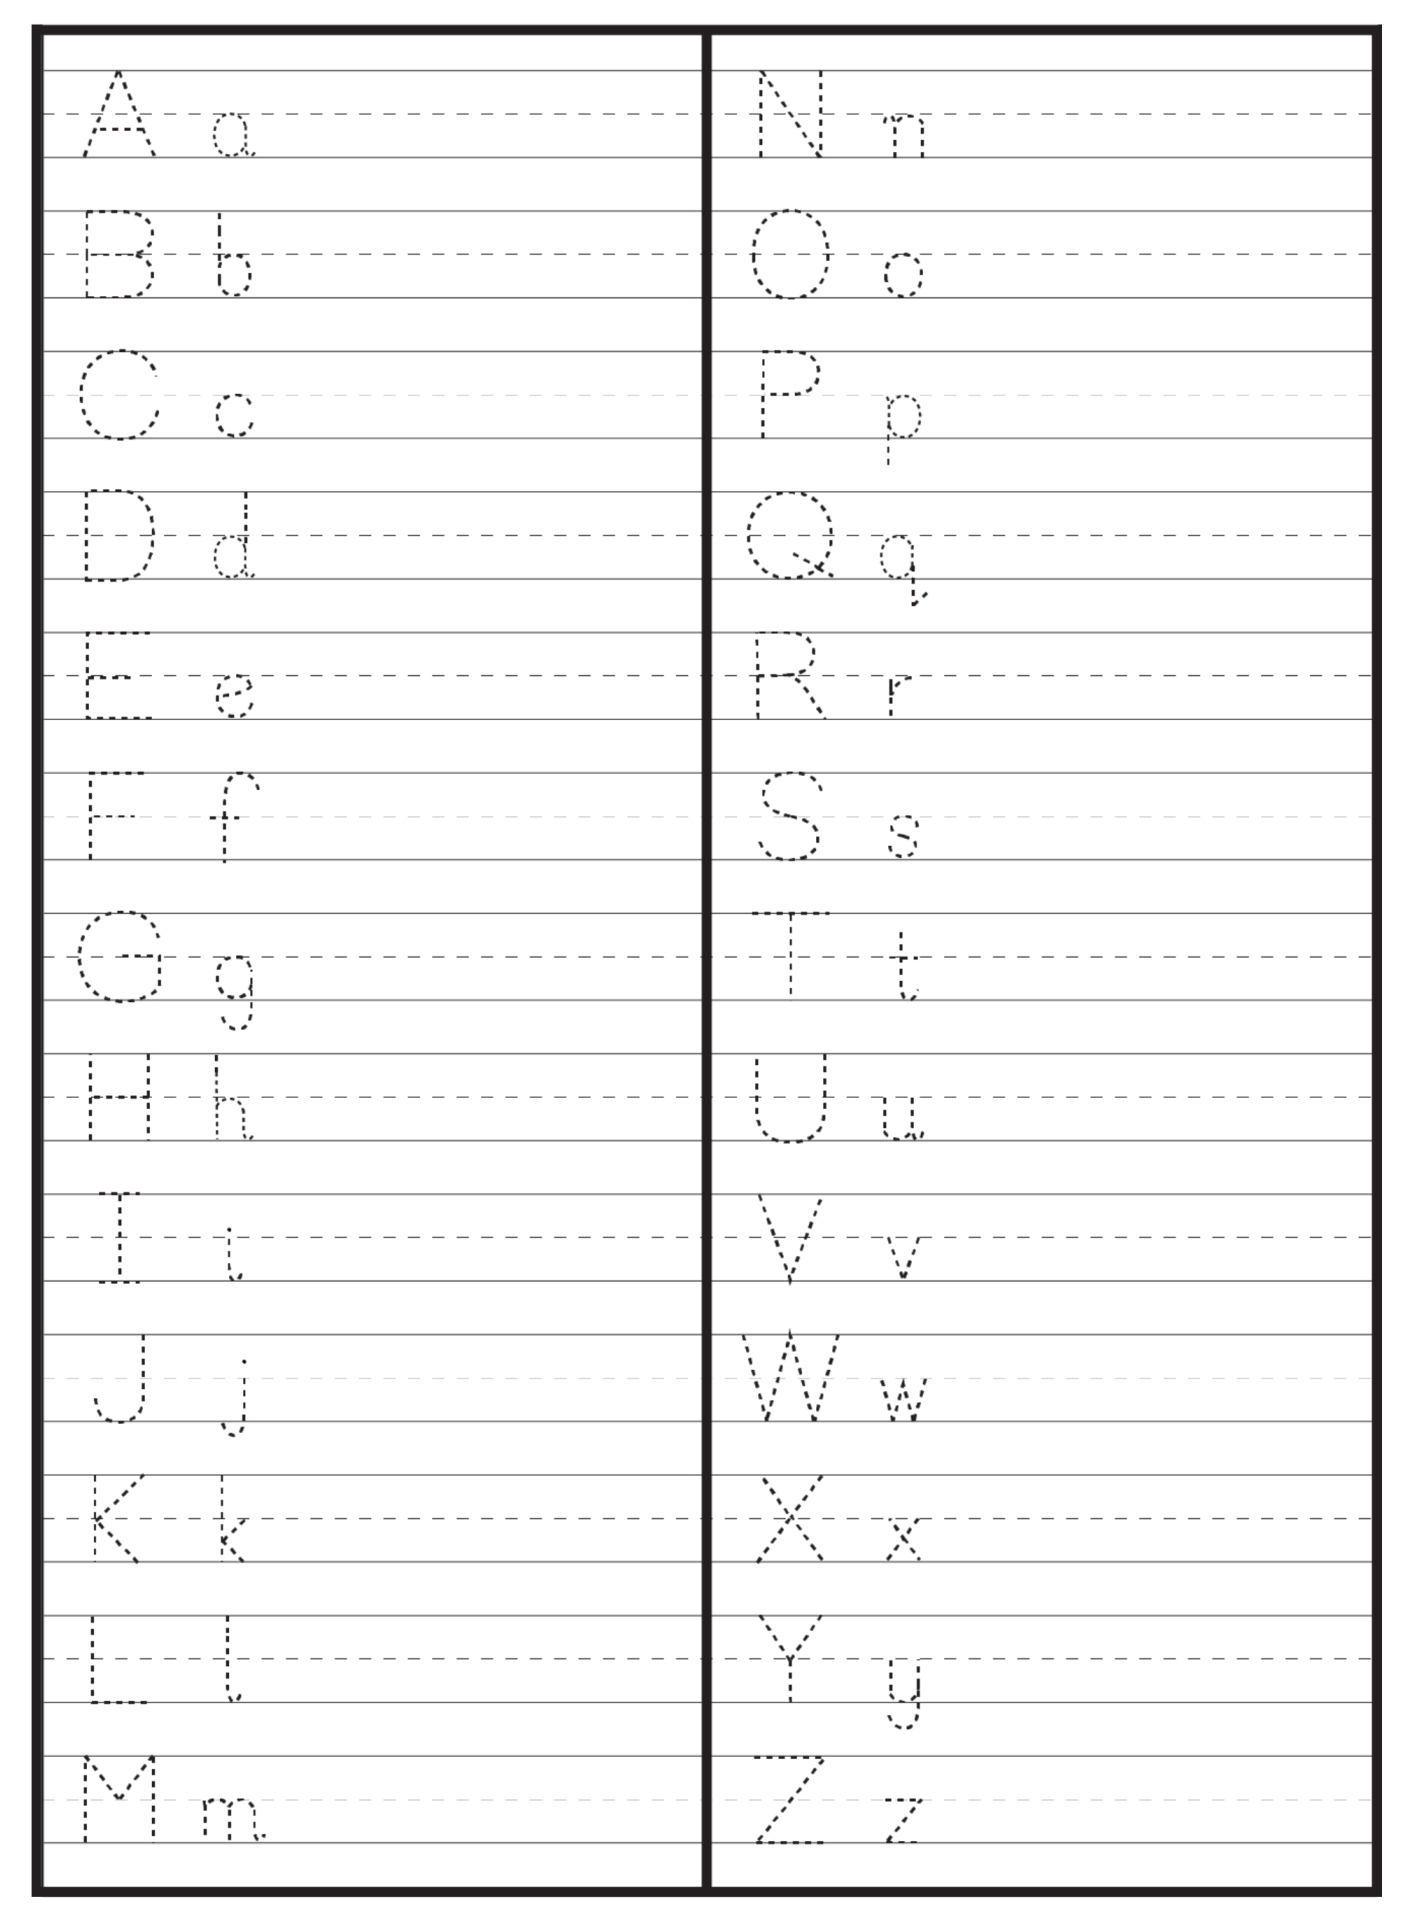 9-best-images-of-printable-alphabet-worksheets-az-alphabet-letter-564